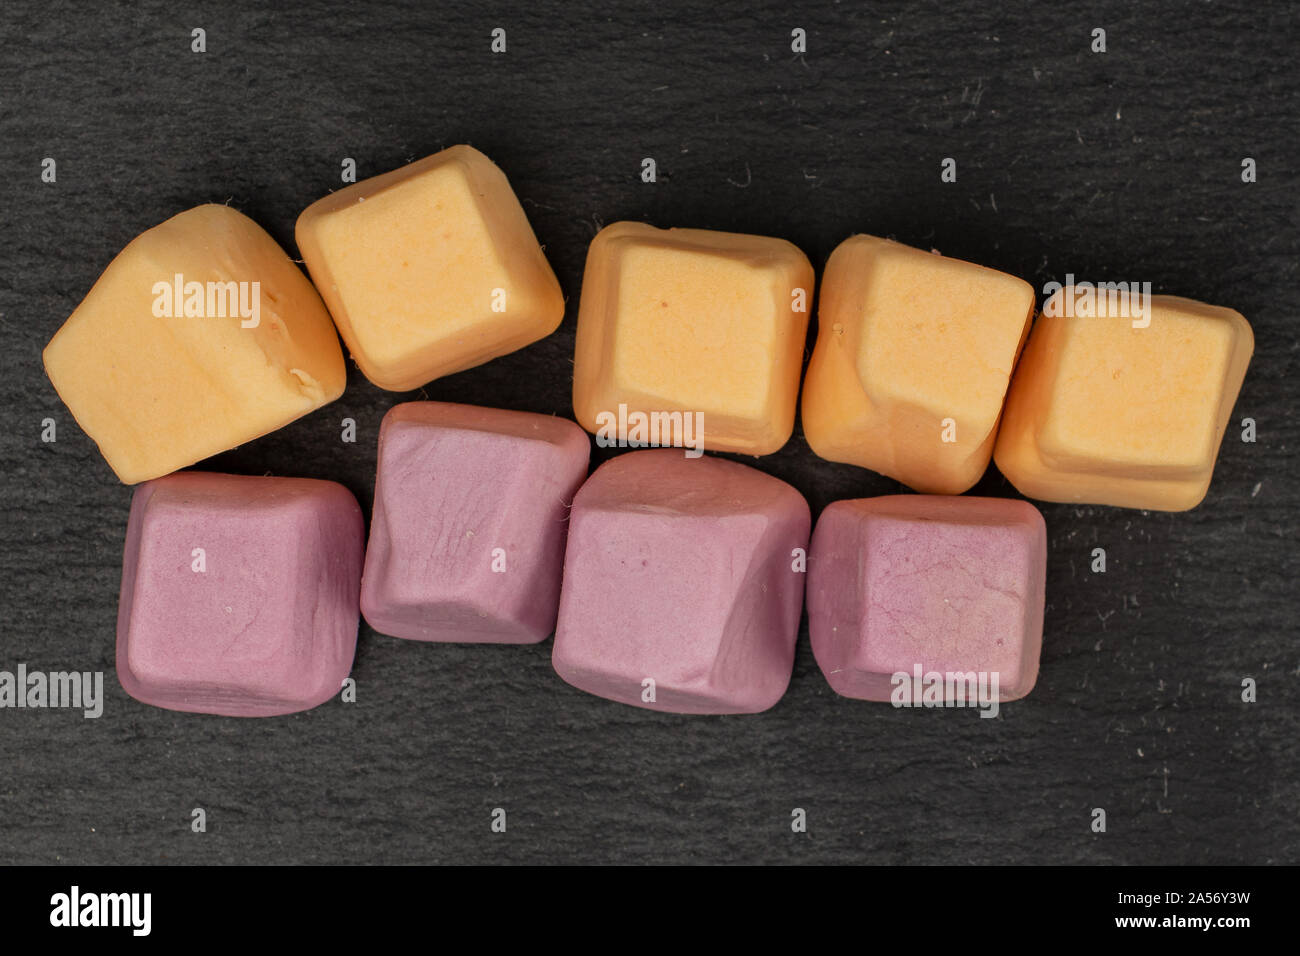 Lot of whole arranged soft pastel candy flatlay on grey stone Stock Photo